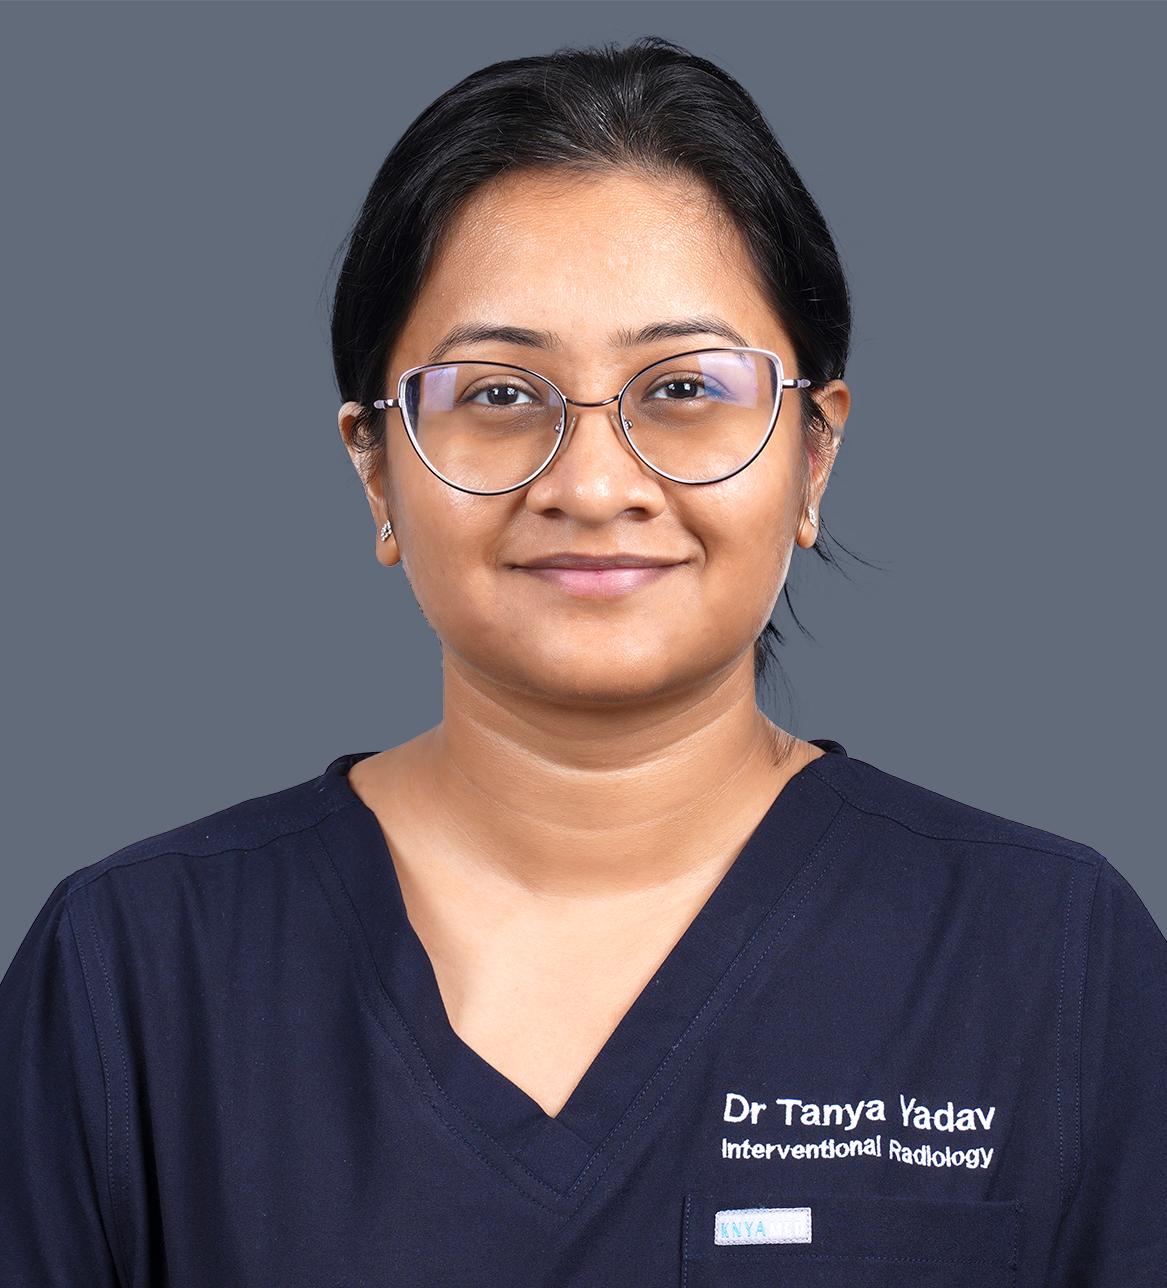 Dr. Tanya Yadav 